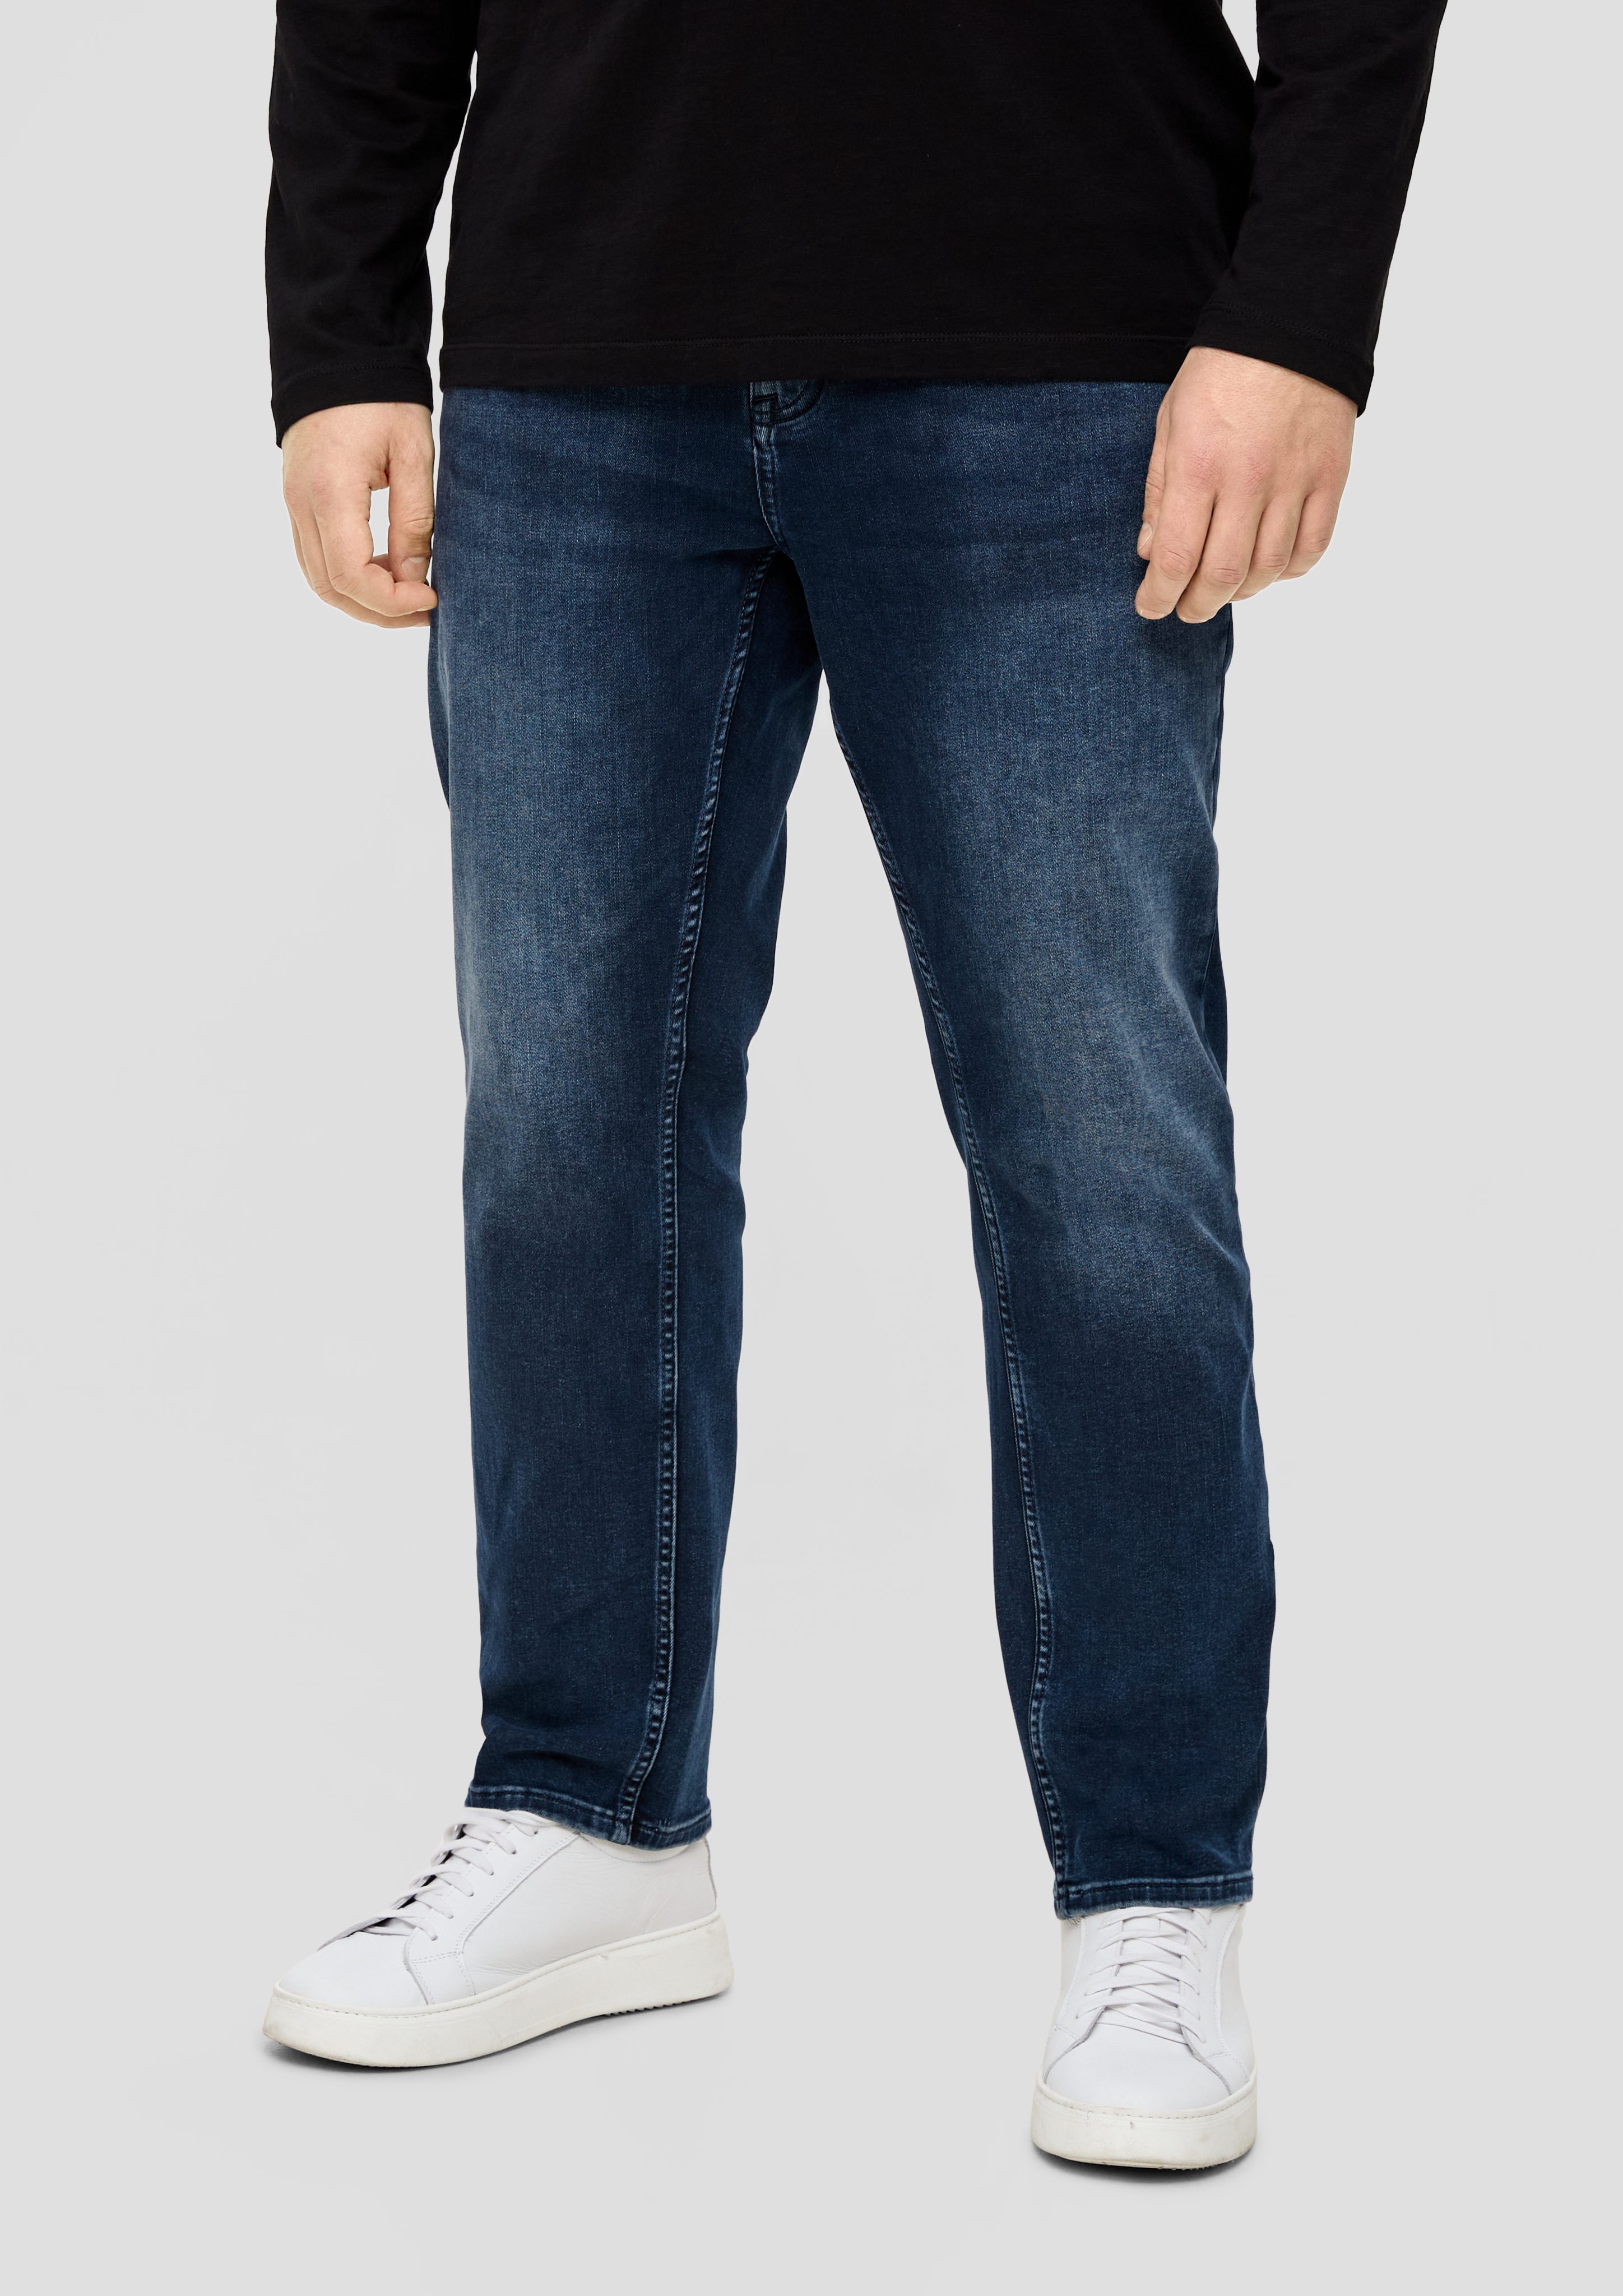 s.Oliver Stoffhose Jeans Nelio Mid Leder-Patch Waschung, Fit / Slim Slim Rise / / Leg